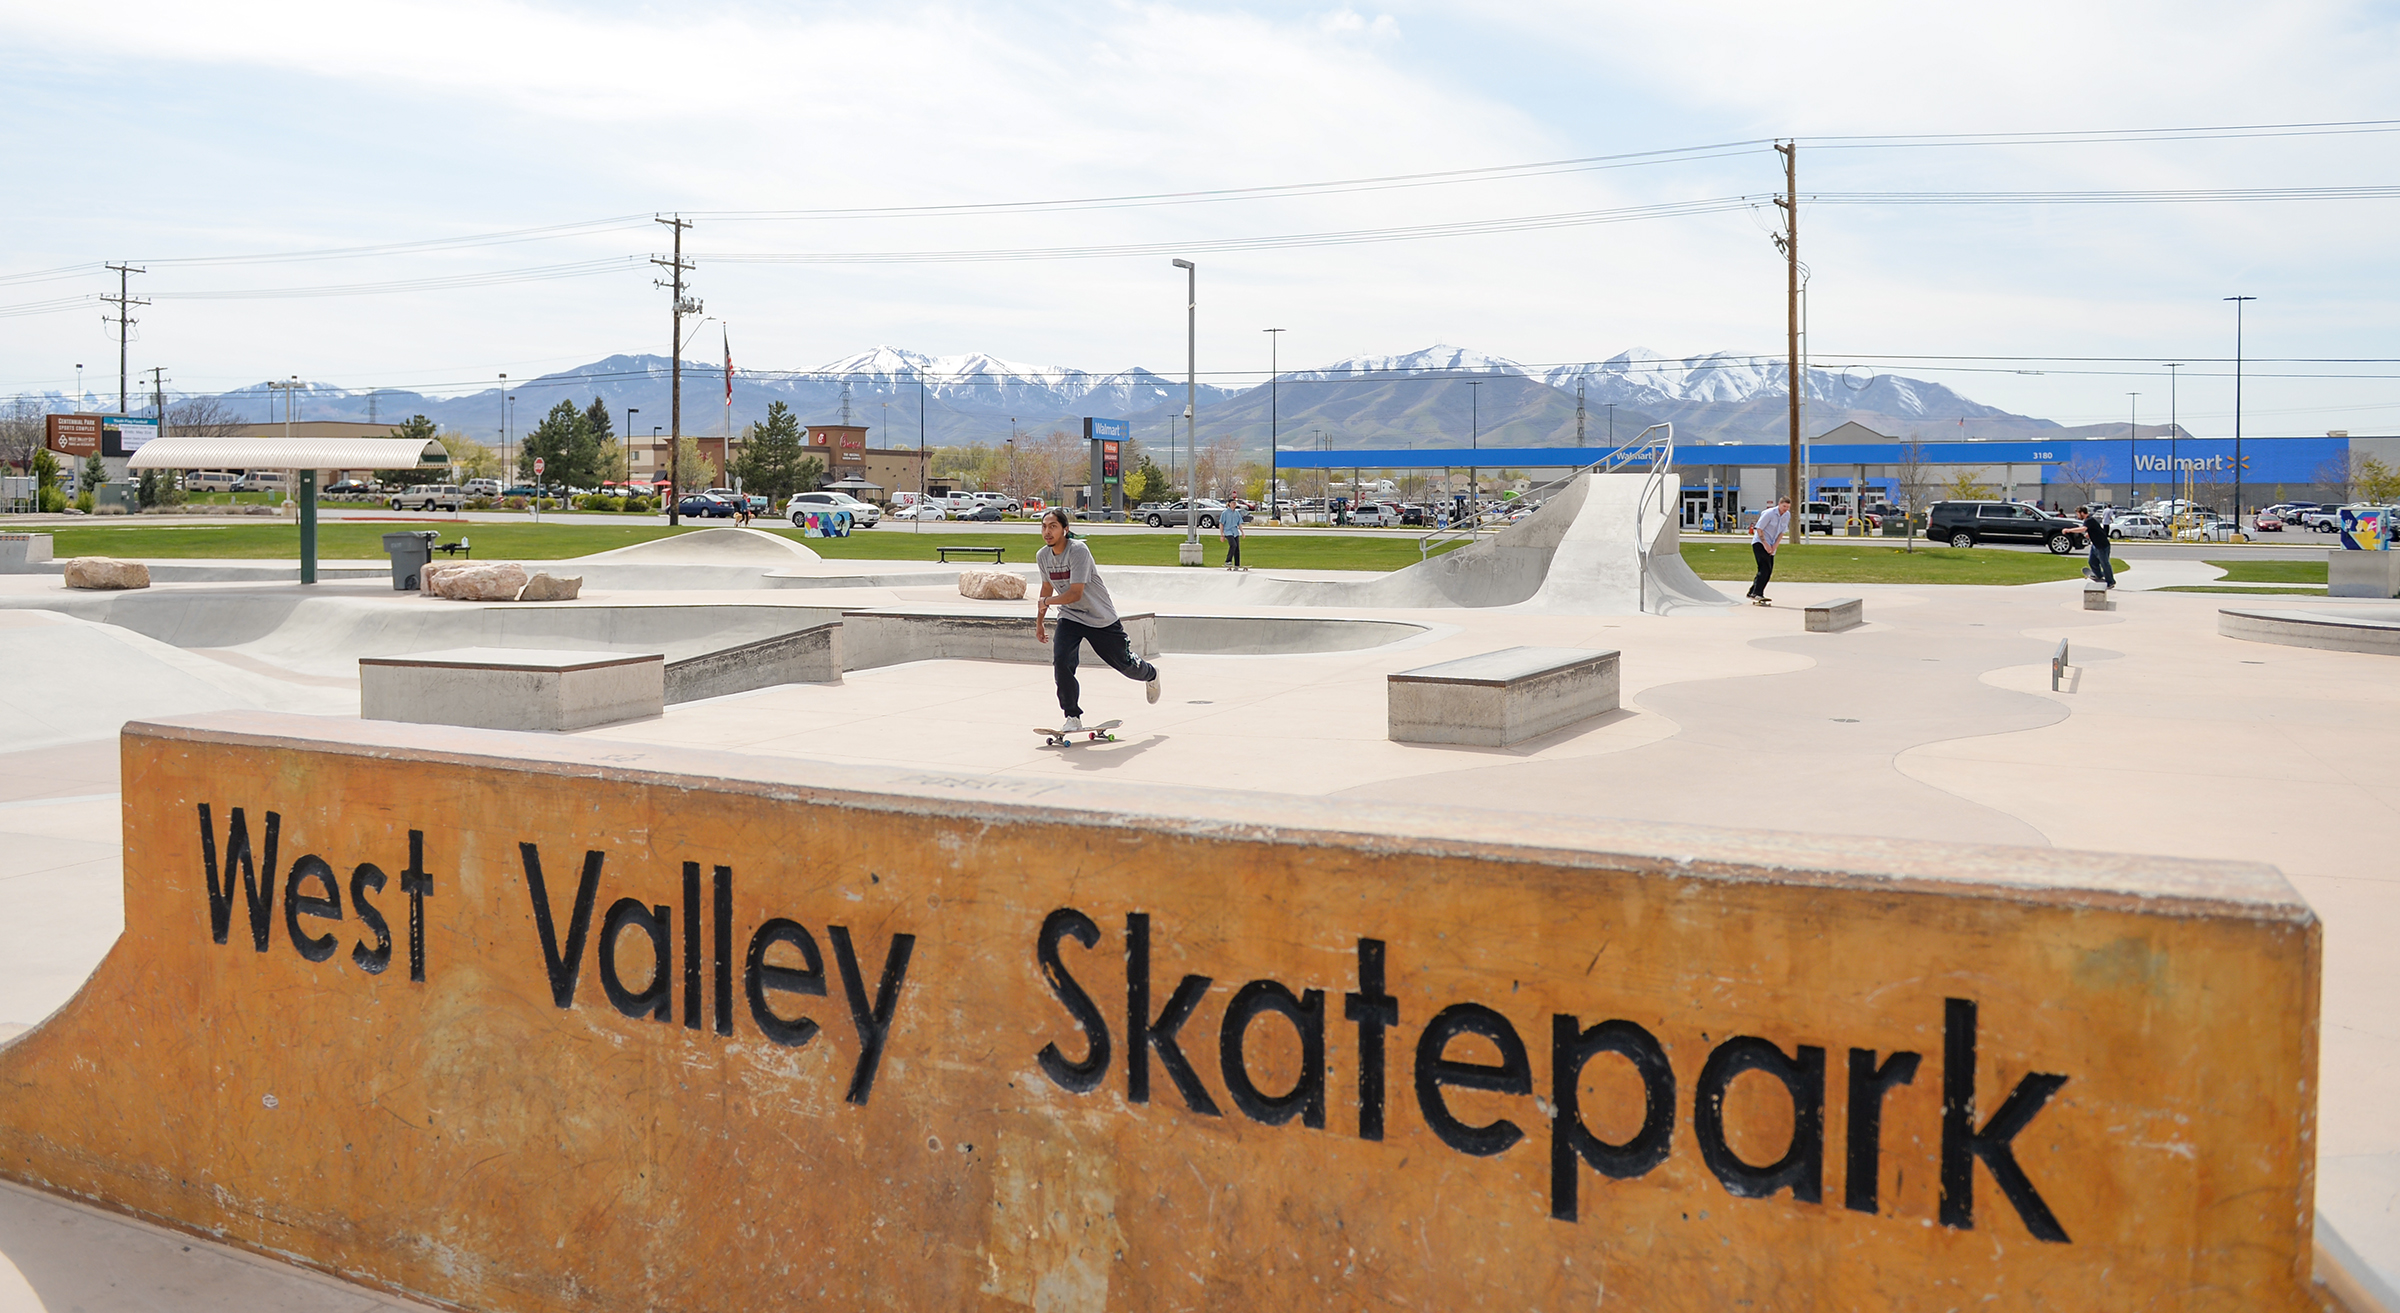 east side sports complex skate park